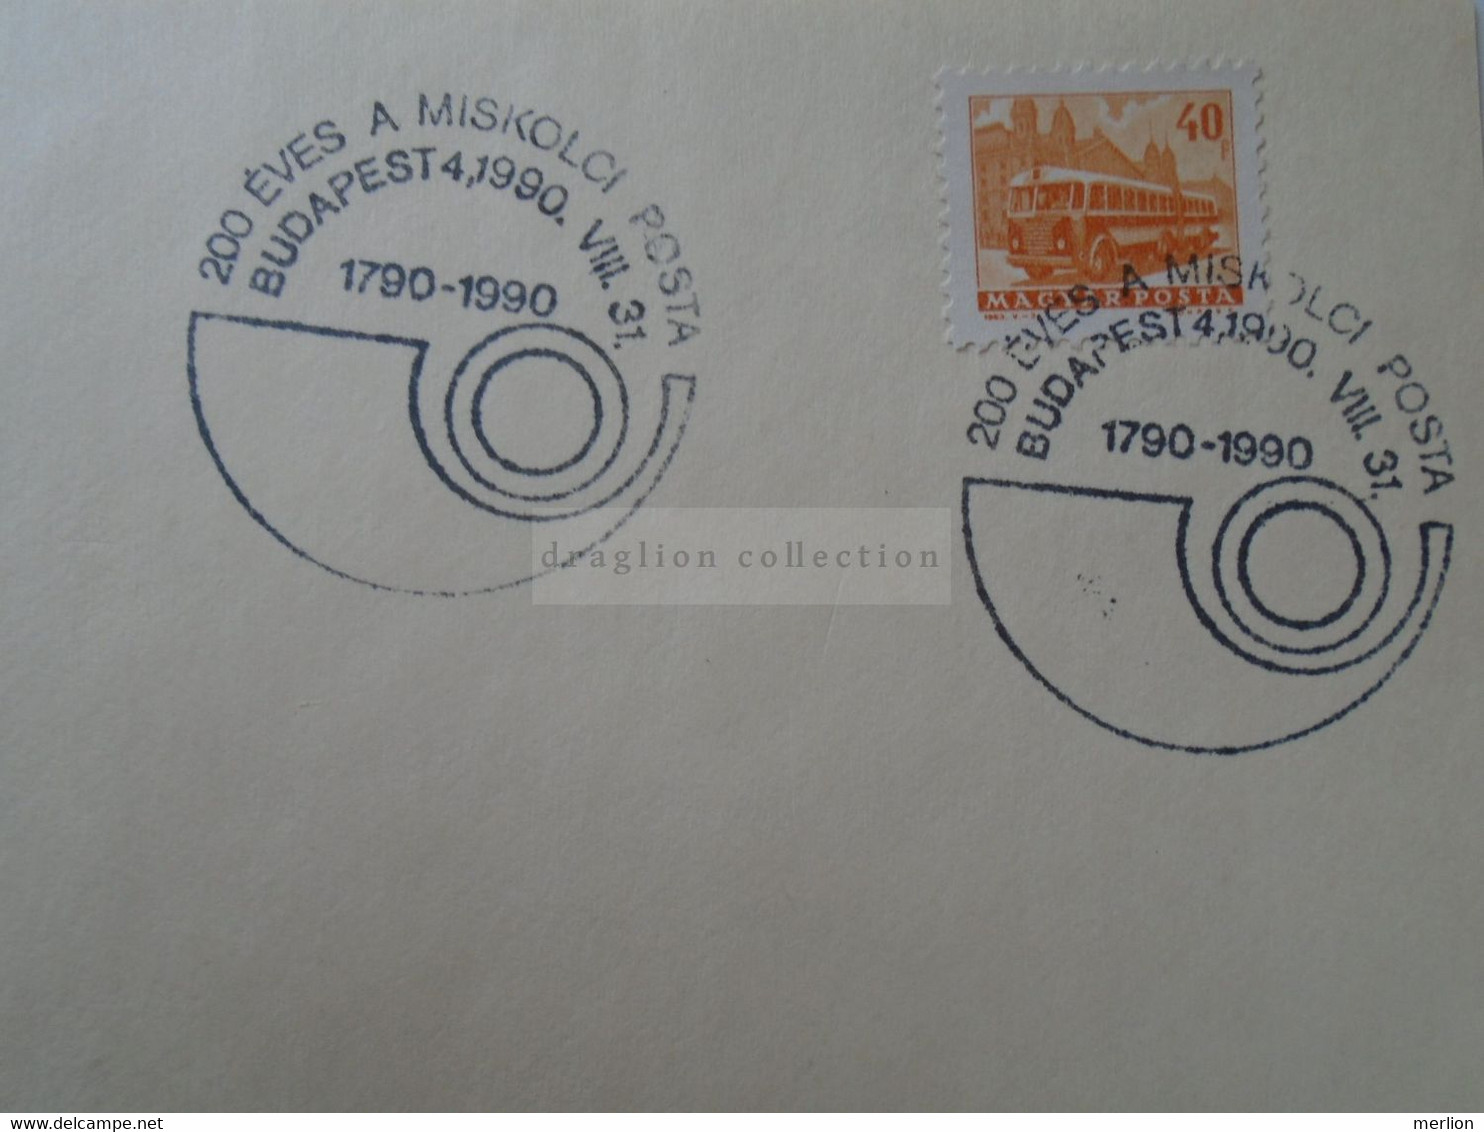 D187084   HUNGARY  Postmark     MAGYAR POSTA   - Hungarian Post - 200 éves  A Miskolci Posta  1790-1990 - Poststempel (Marcophilie)